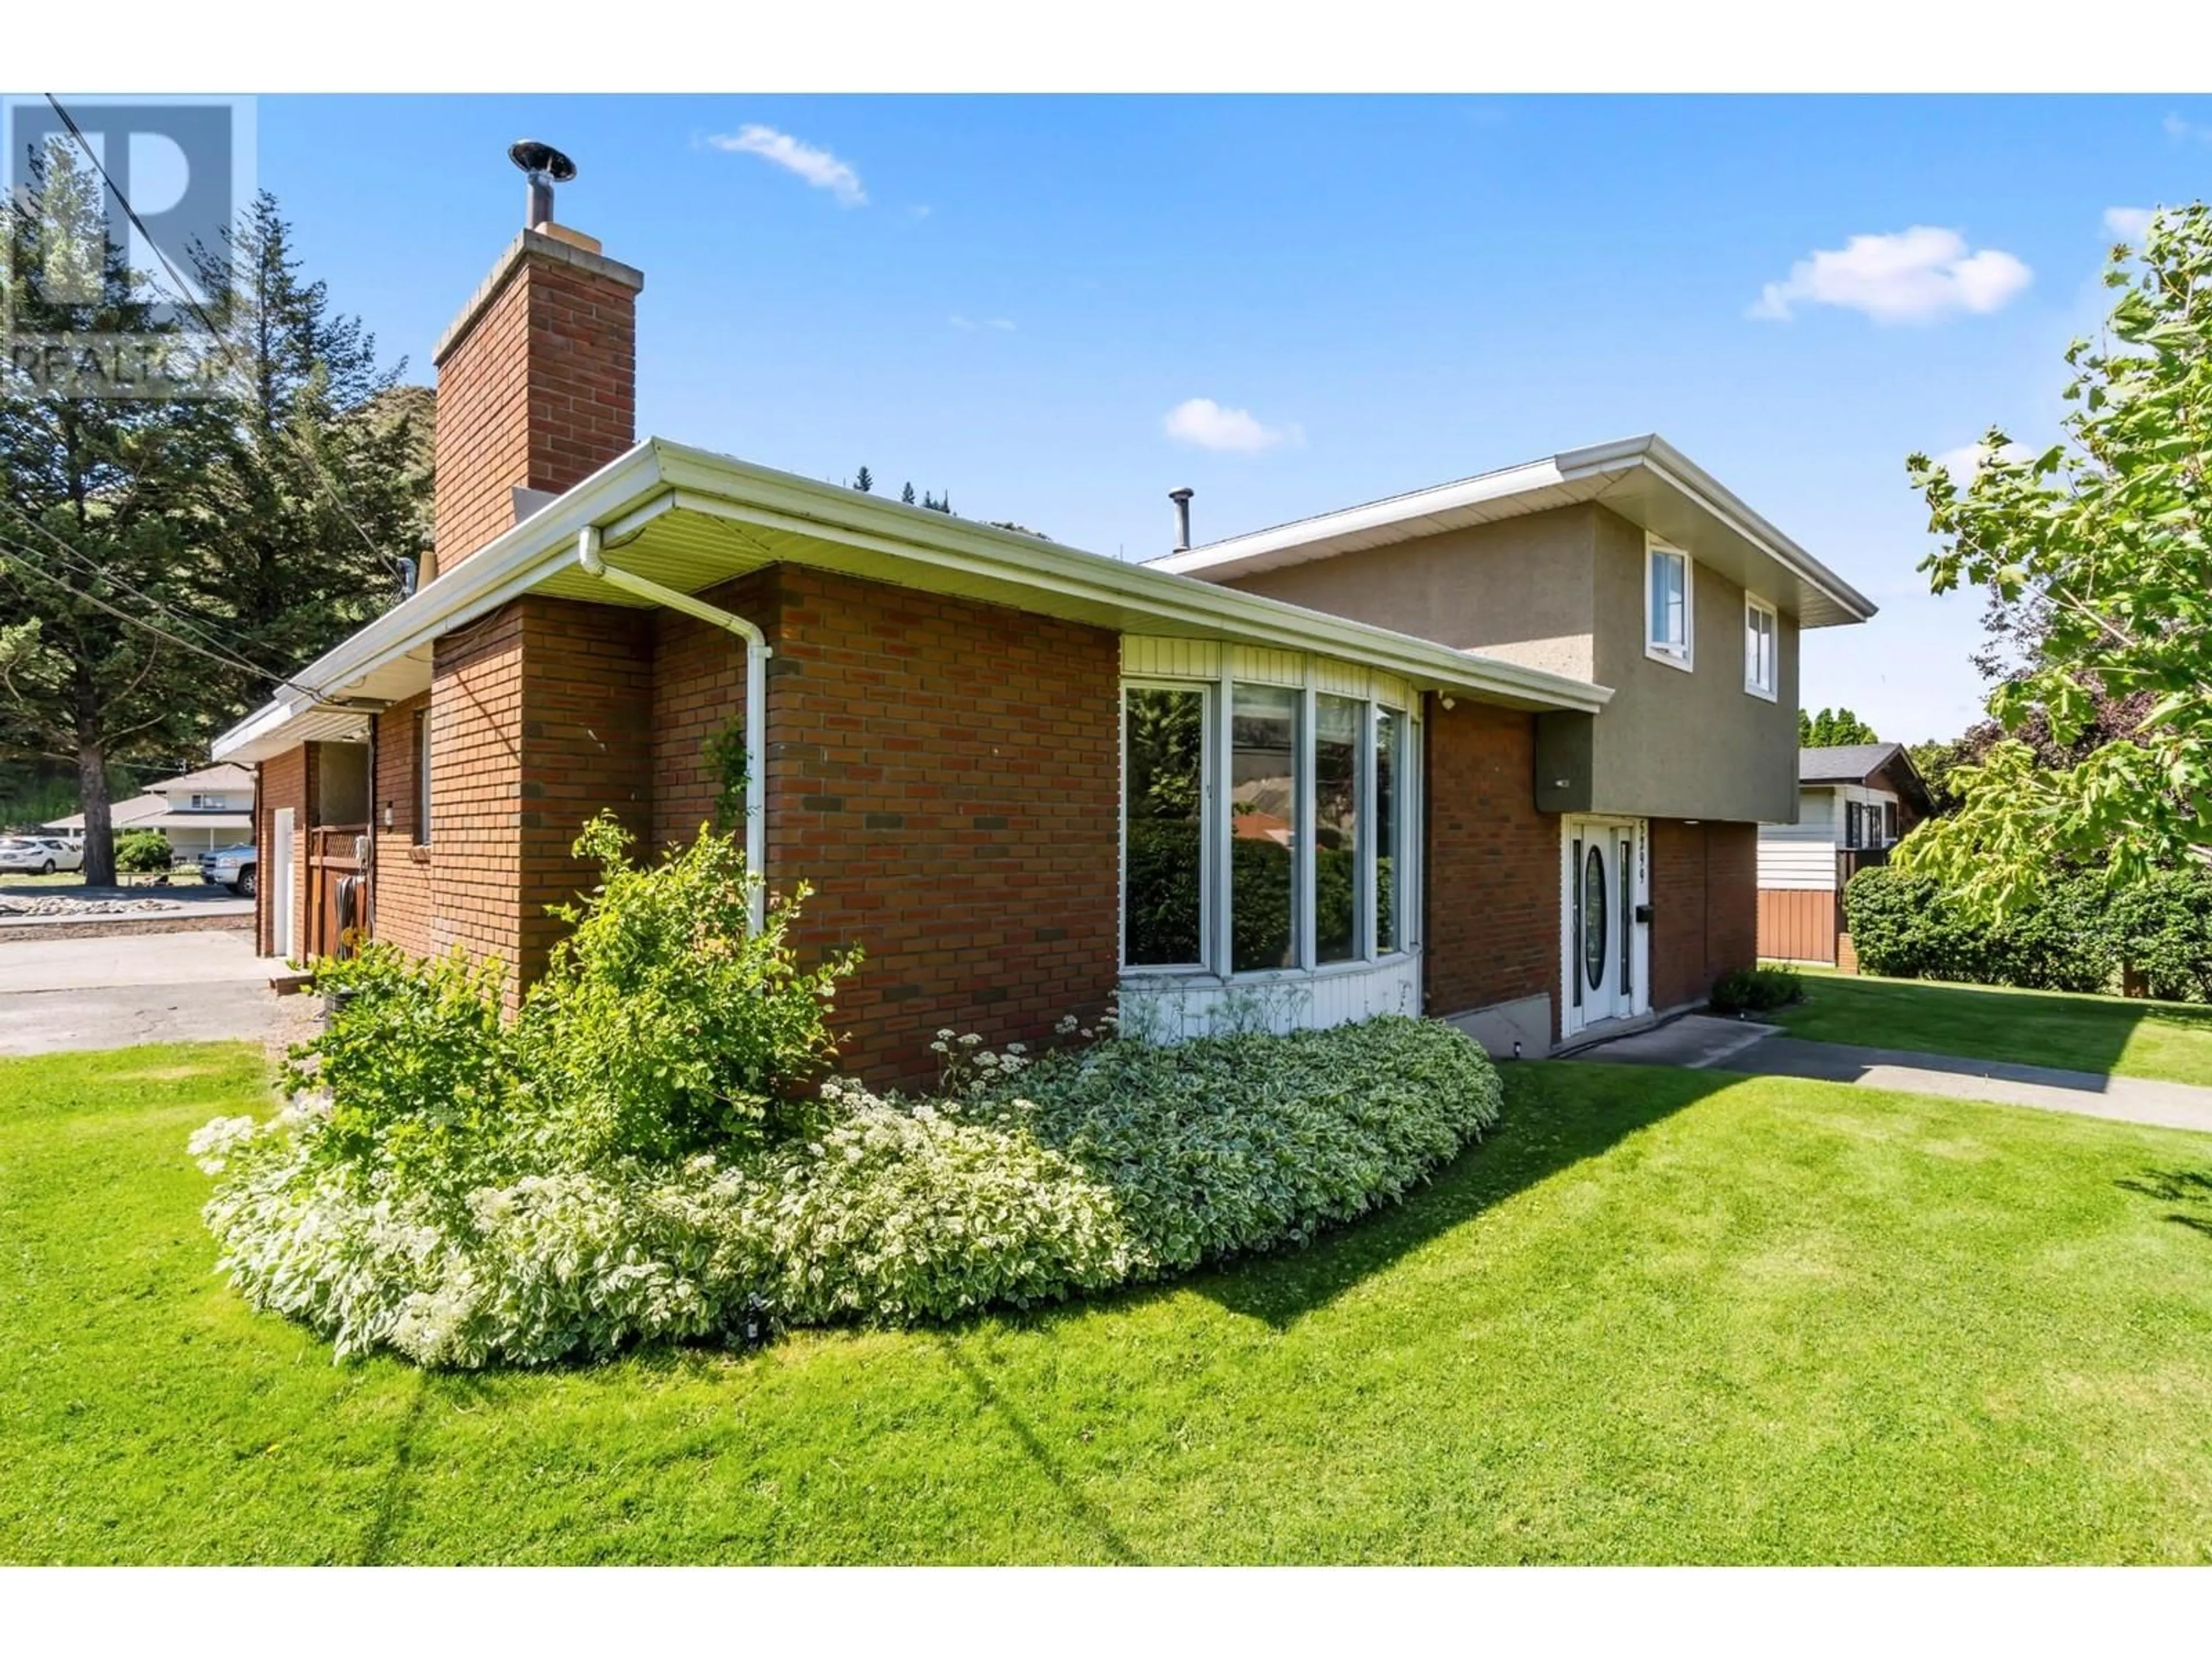 Home with brick exterior material for 5299 DALLAS DRIVE, Kamloops British Columbia